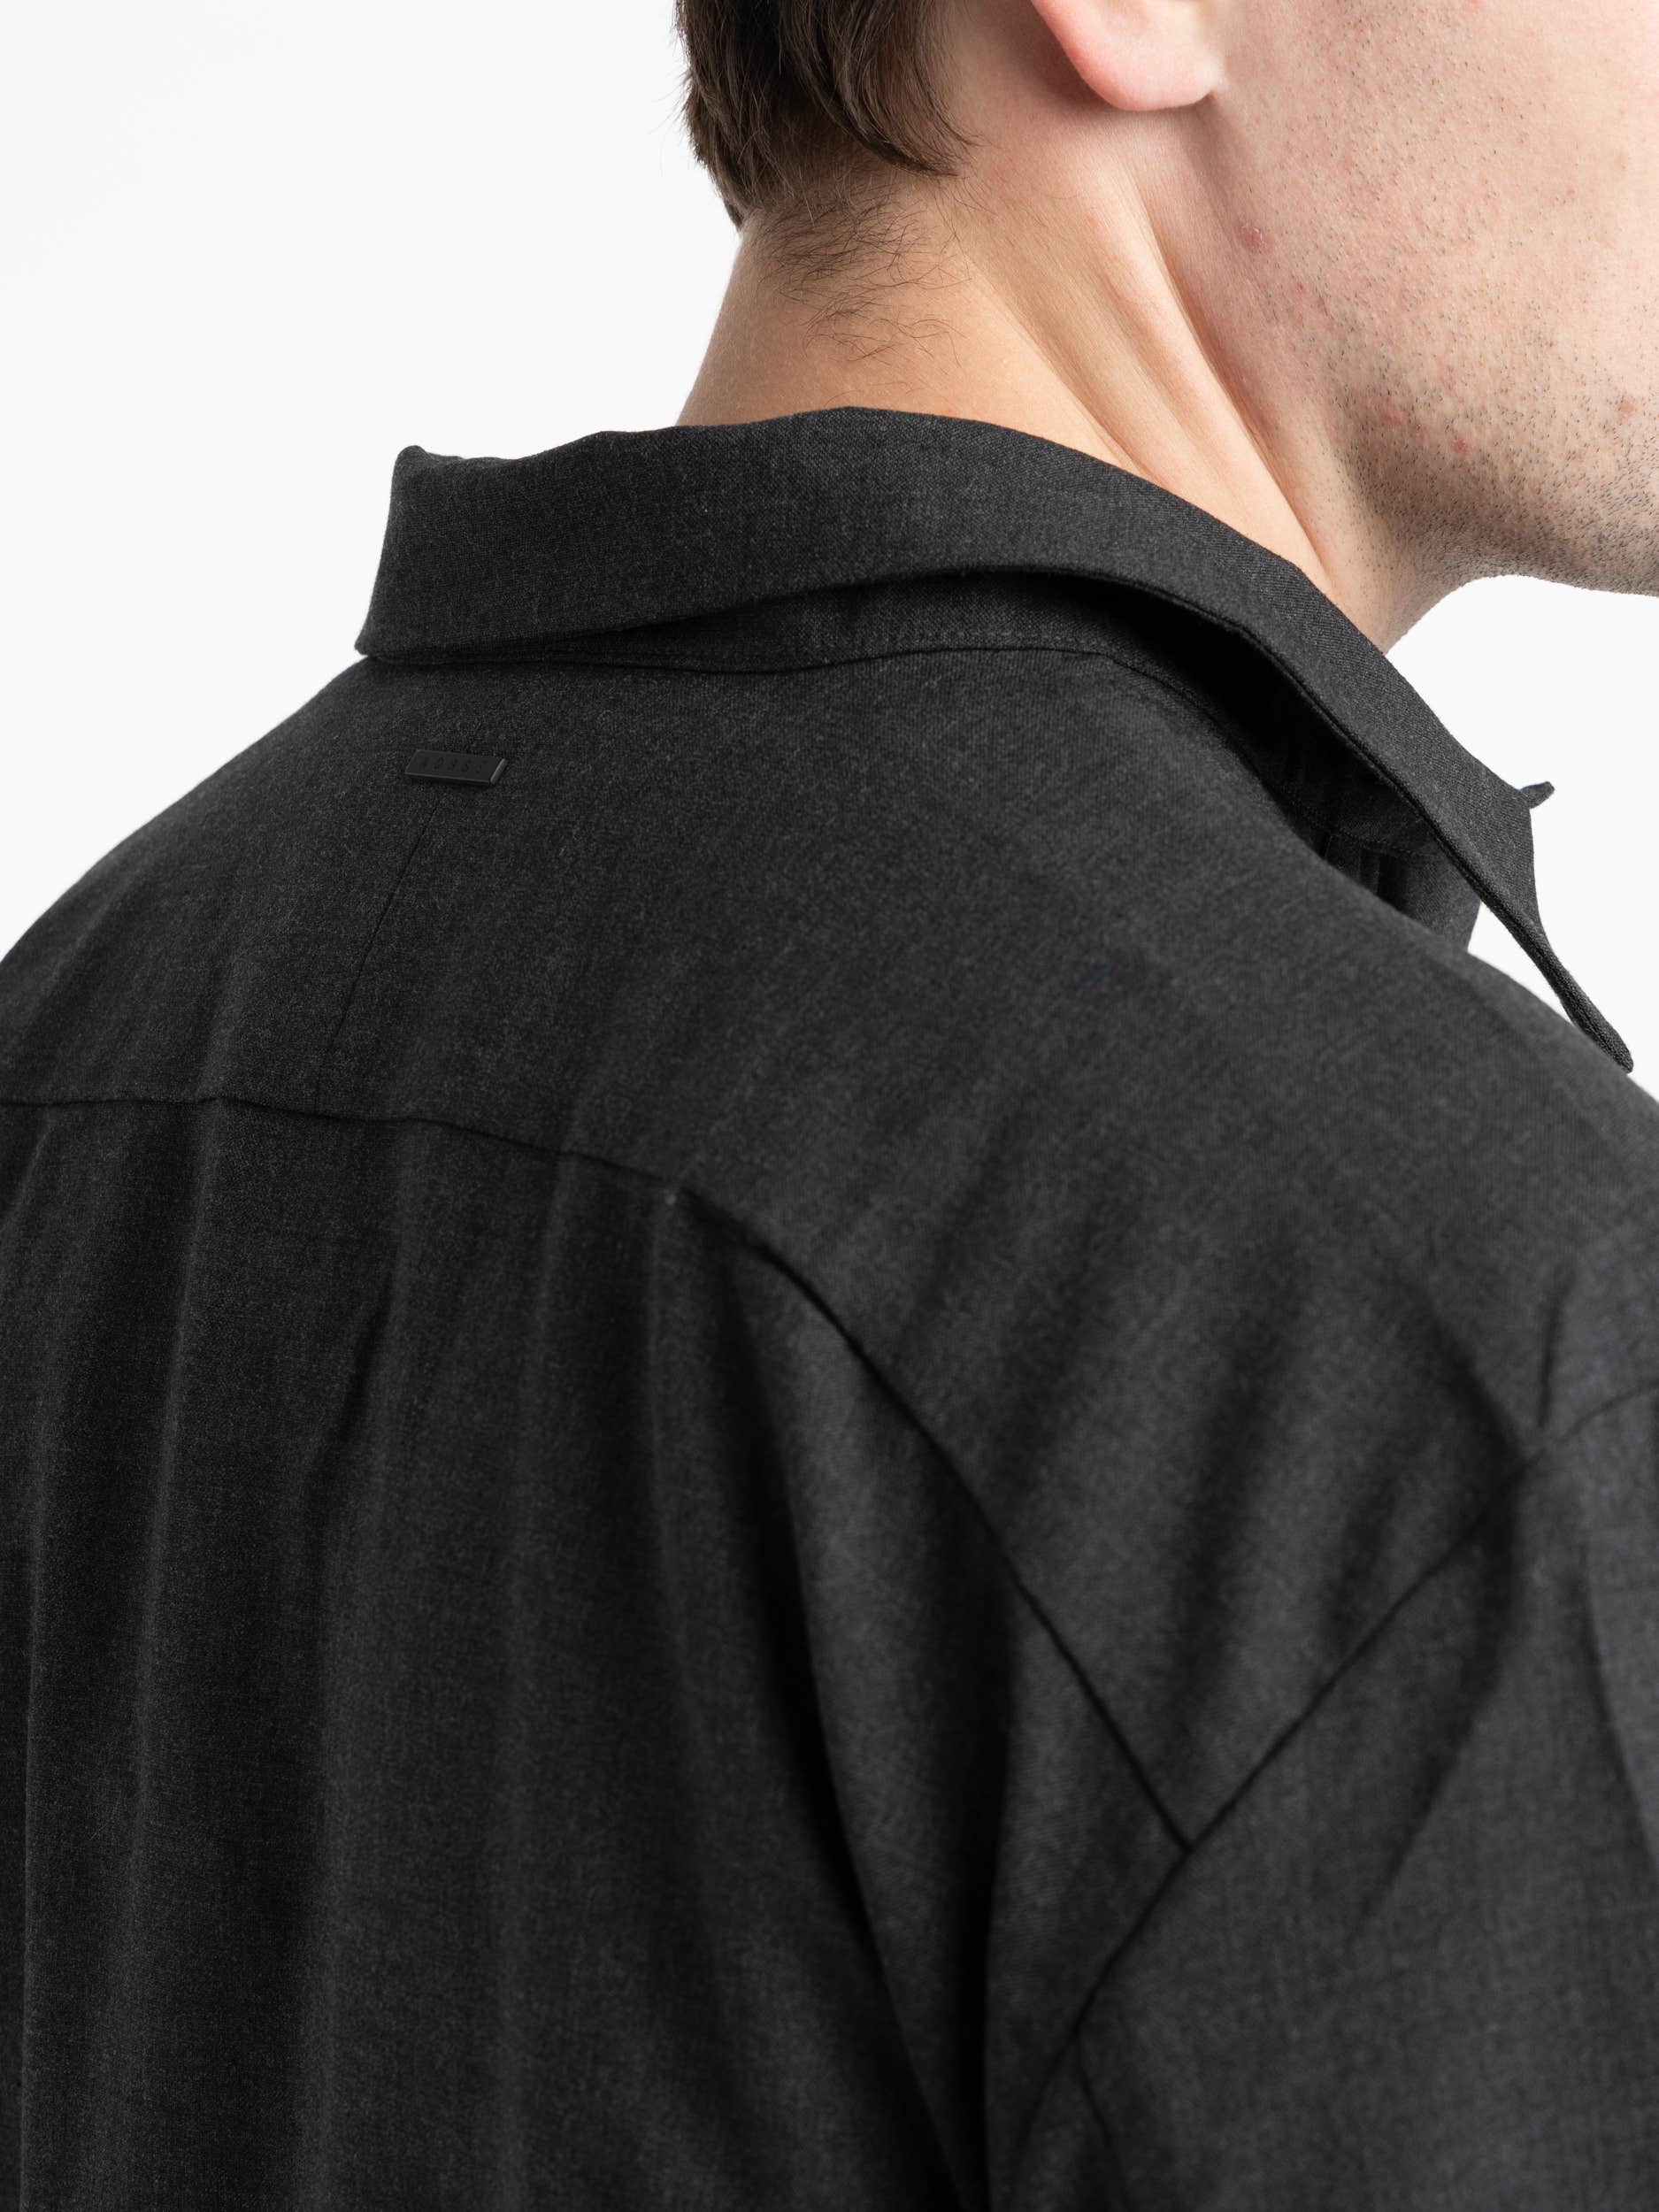 Charcoal Grey Cordura Tech Wool Overshirt